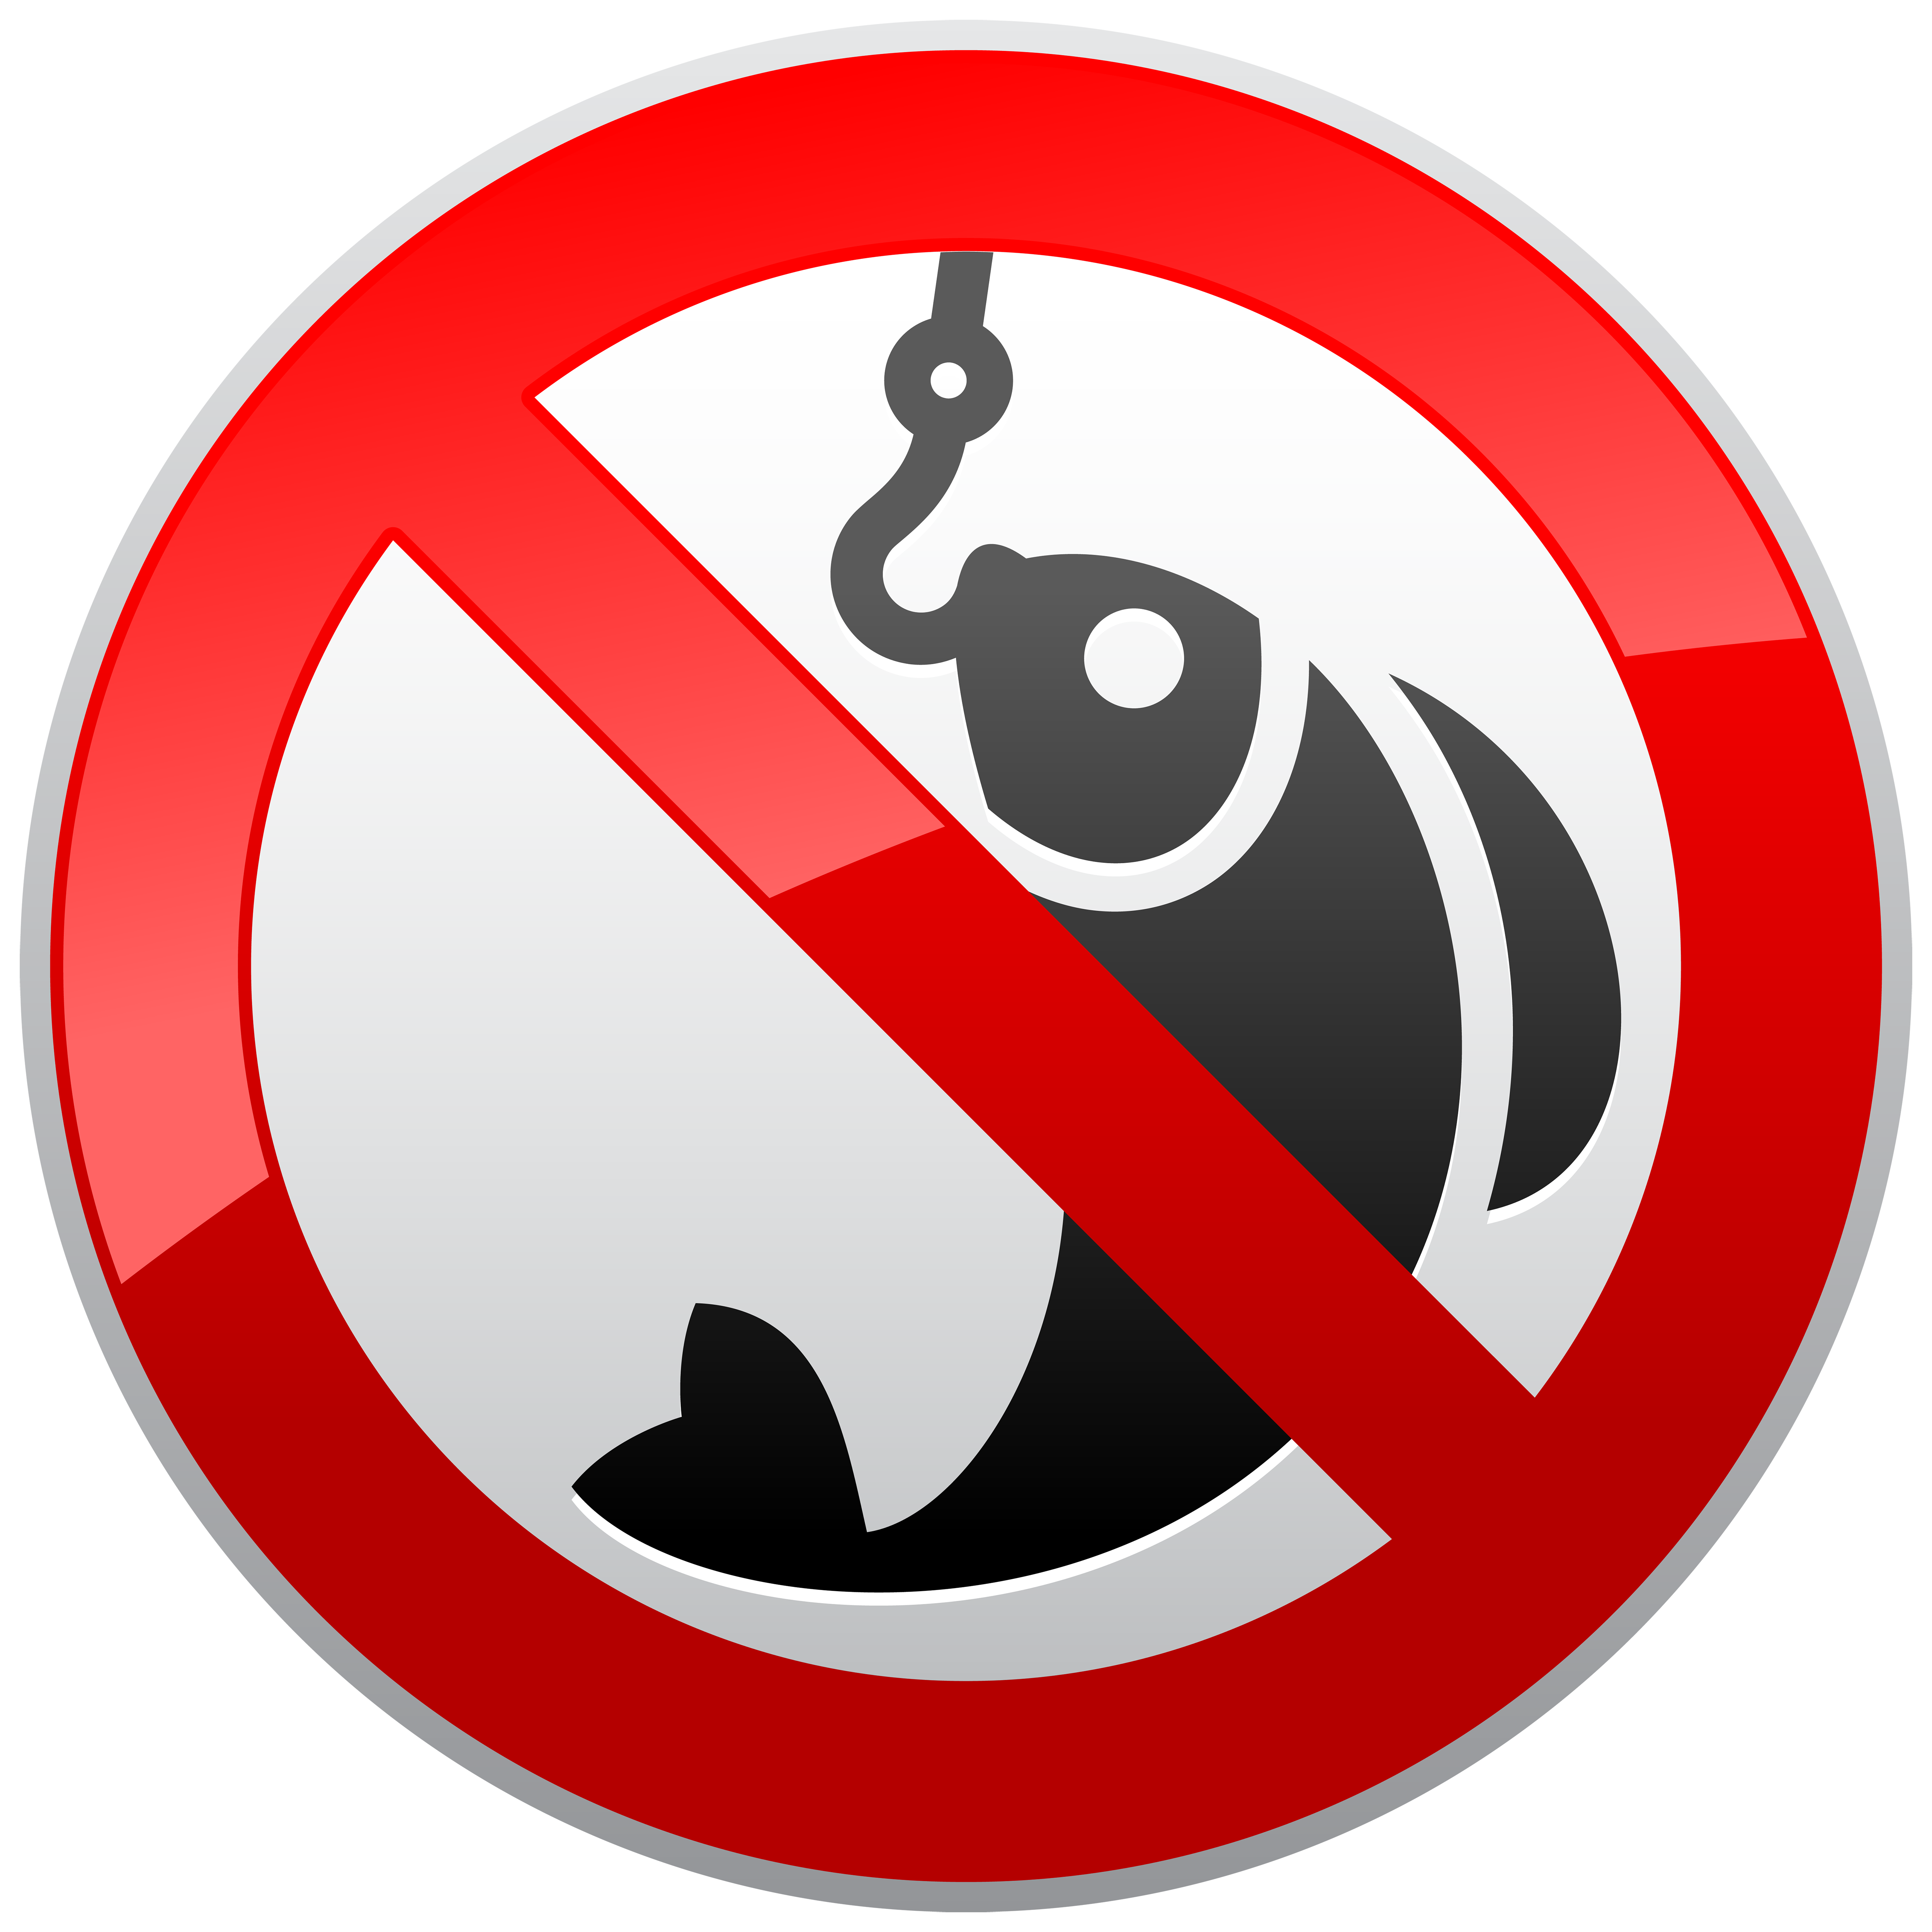 no fishing sign clip art